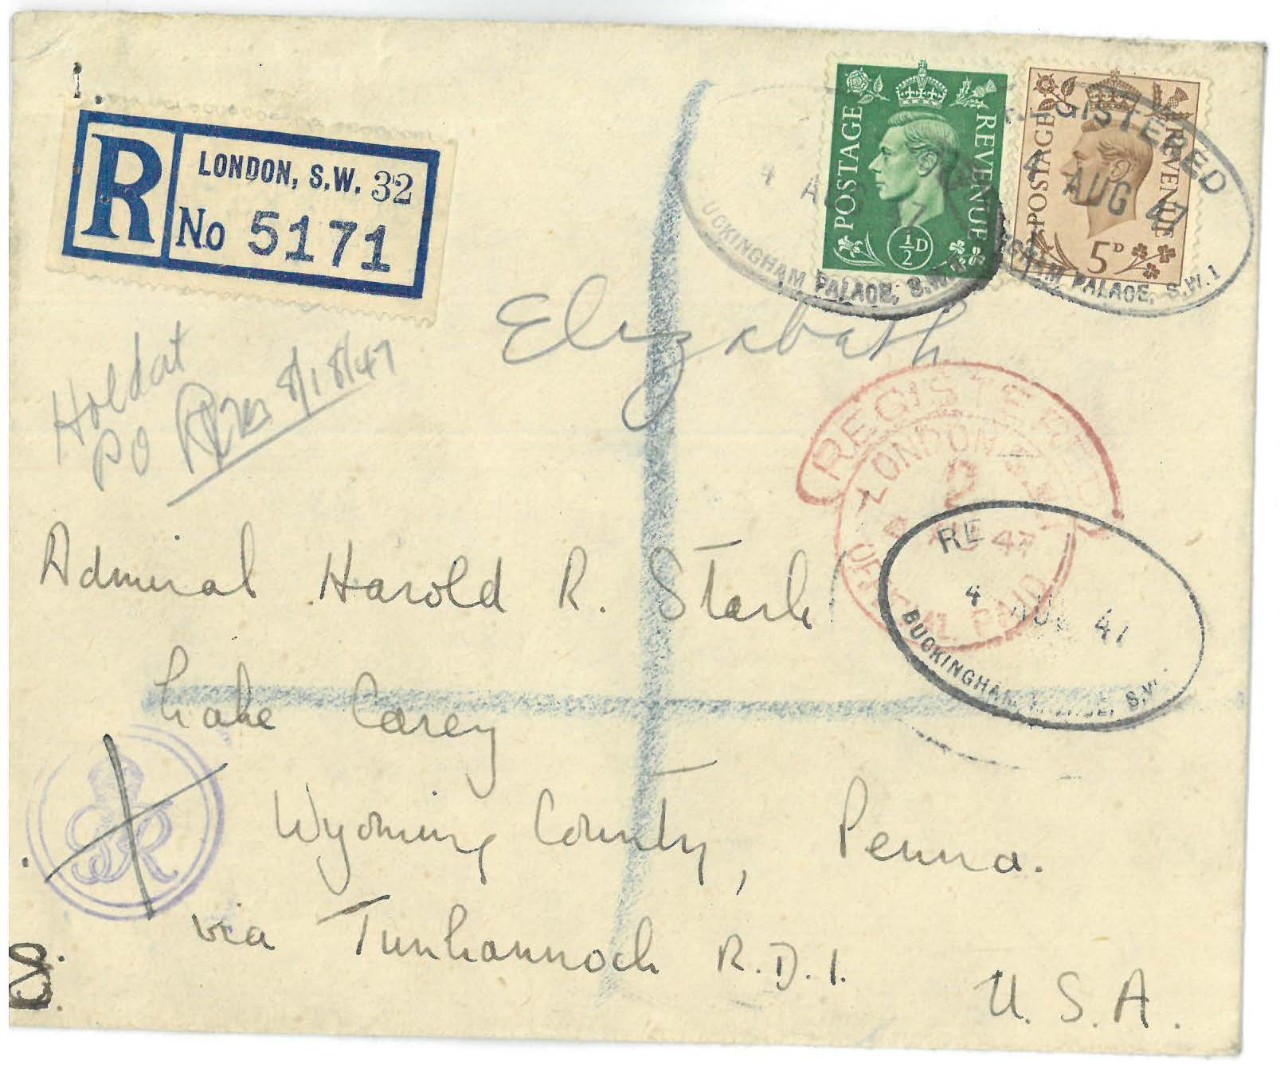 Letter from Princess Elizabeth to Admiral Stark, August 3, 1947 (envelope)